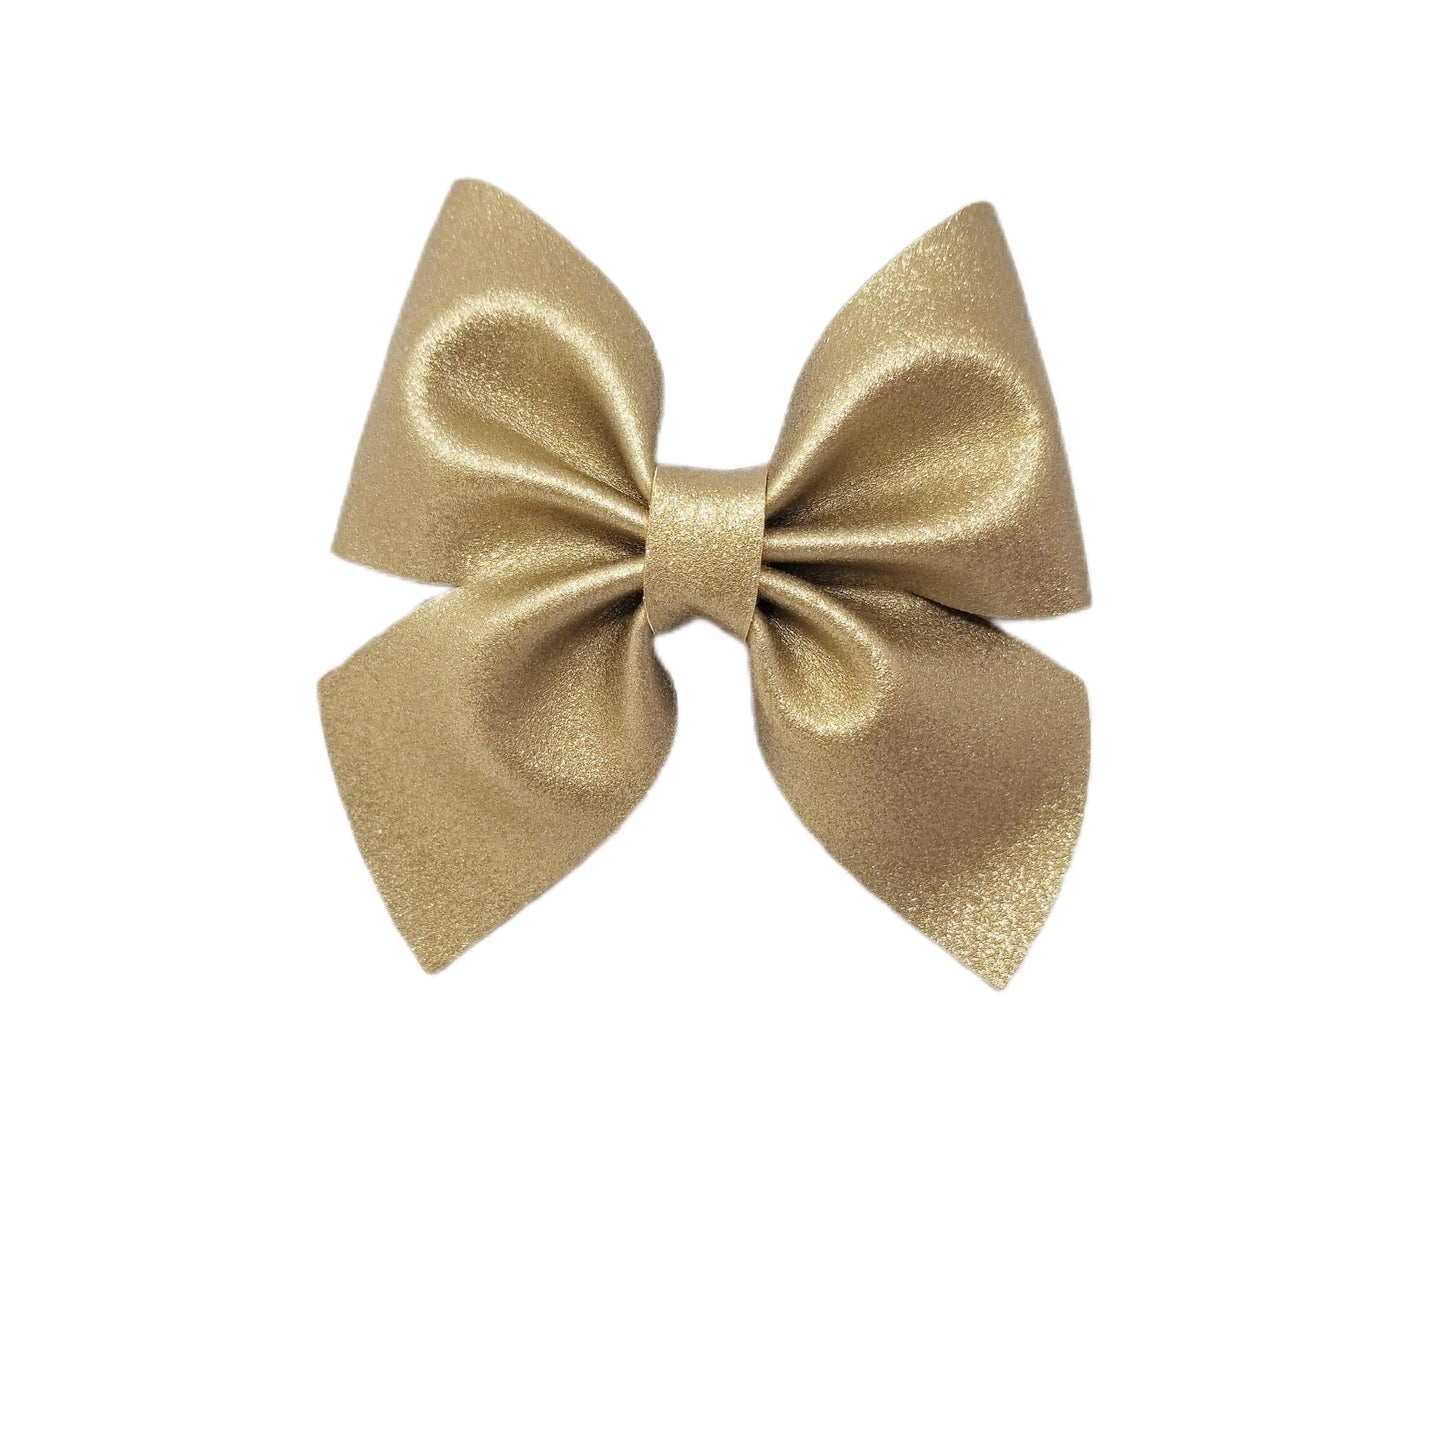 3.75 inch Gold Ladylike Bow